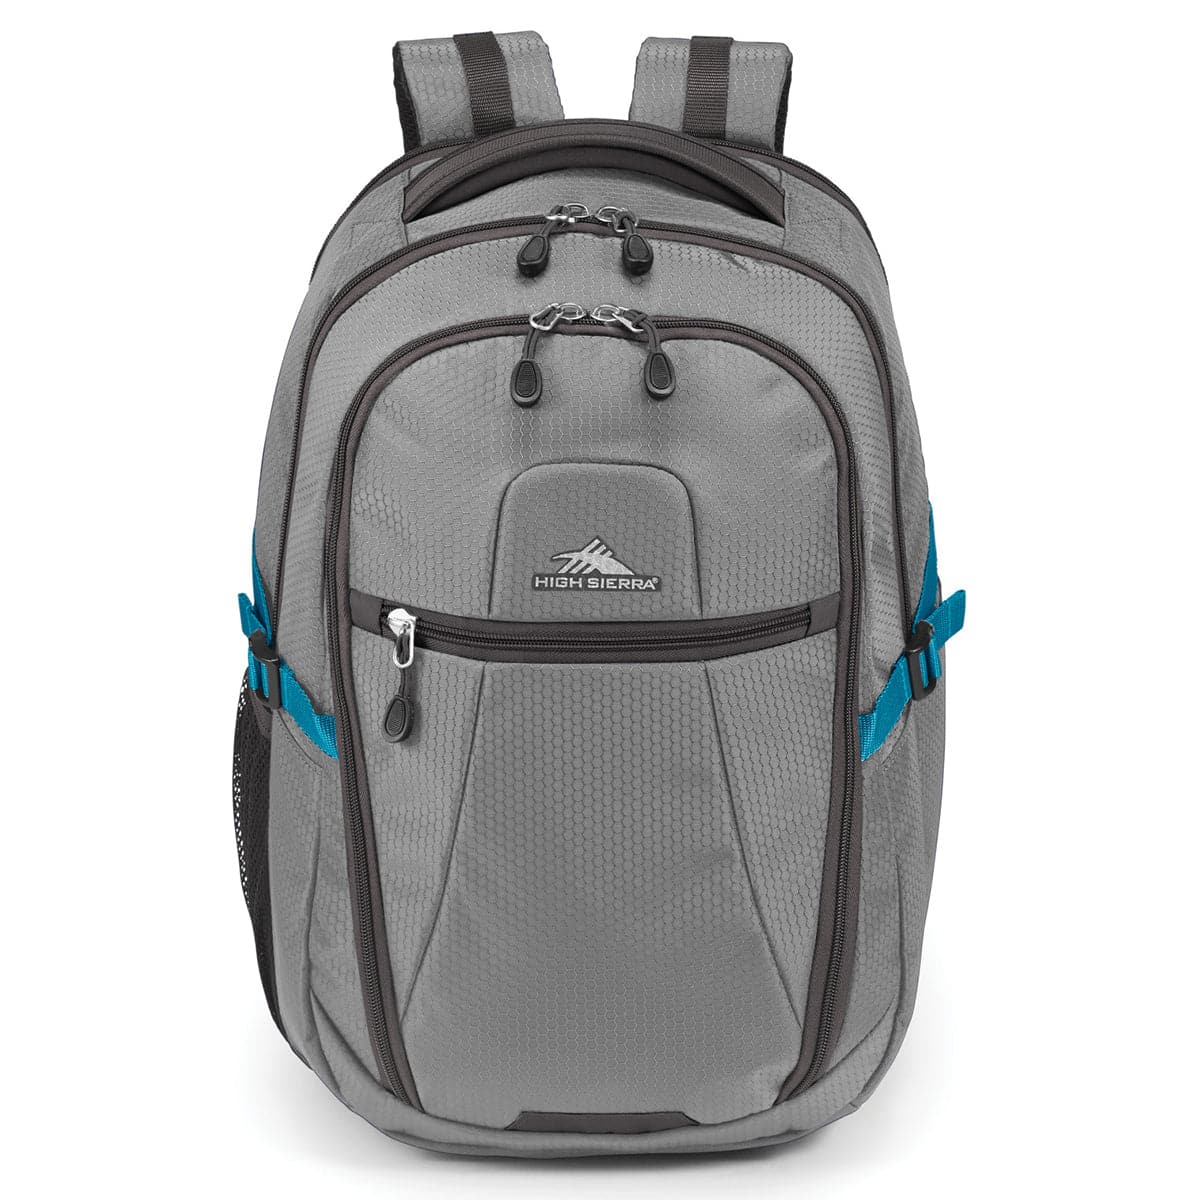 High Sierra Fairlead Computer Backpack